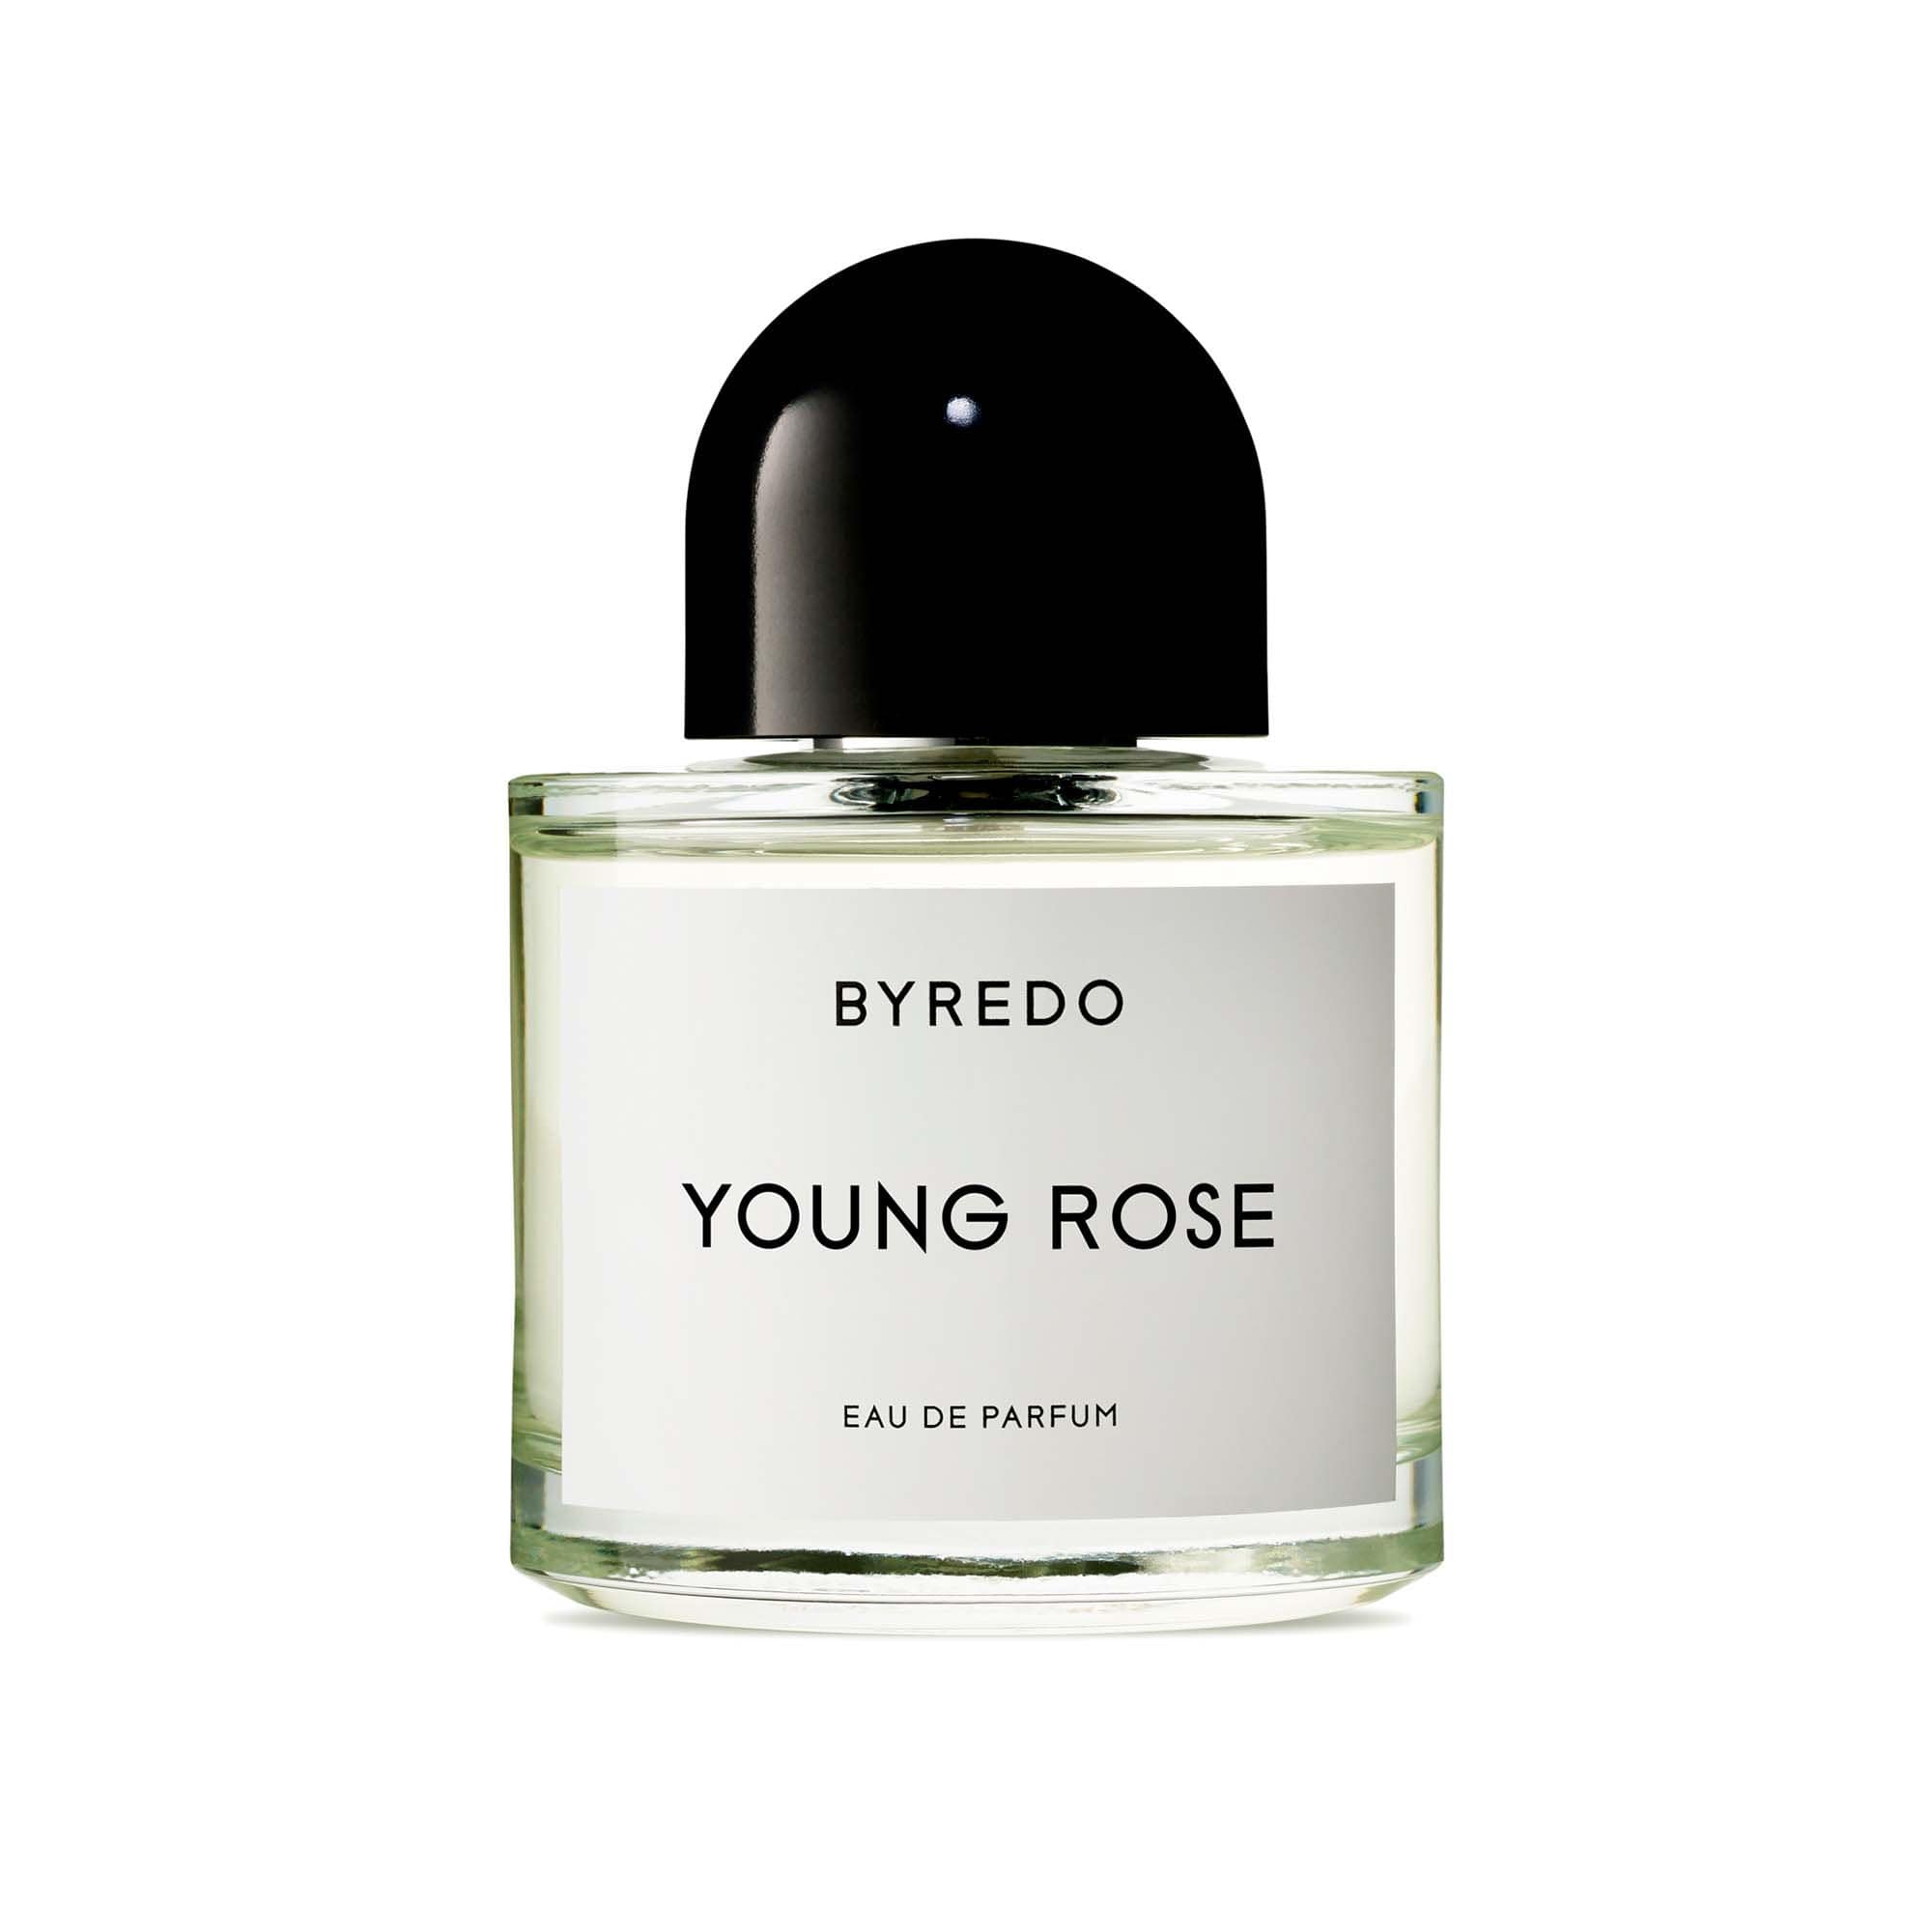 Young Rose BYREDO Eau de Parfum